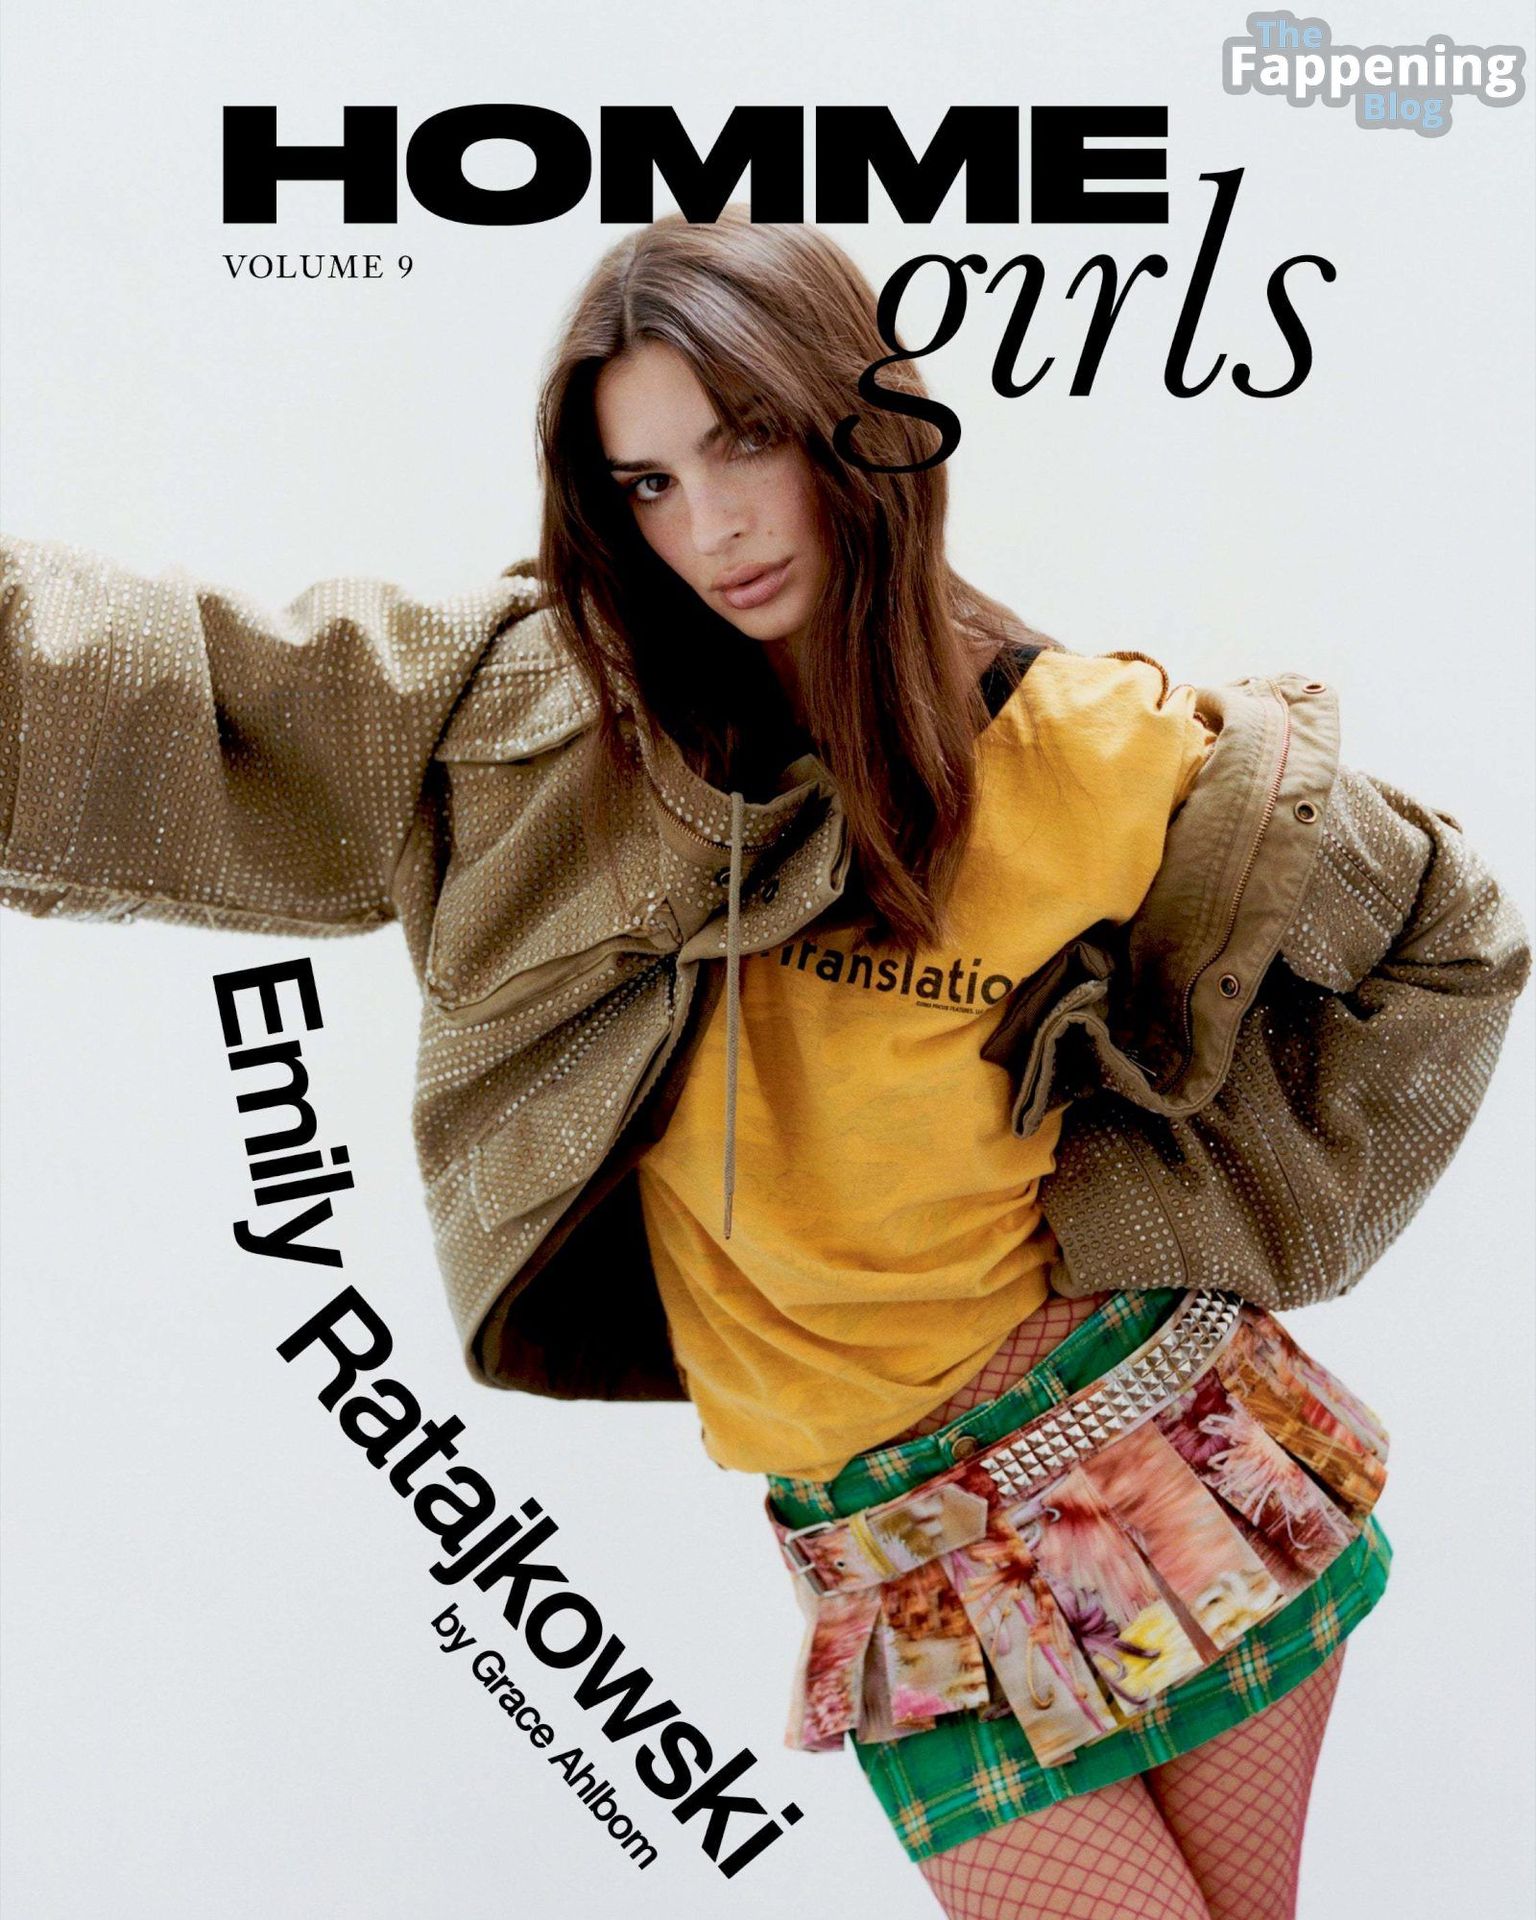 Emily Ratajkowski Shows Some Skin for the HommeGirls Volume 9 (16 Photos)